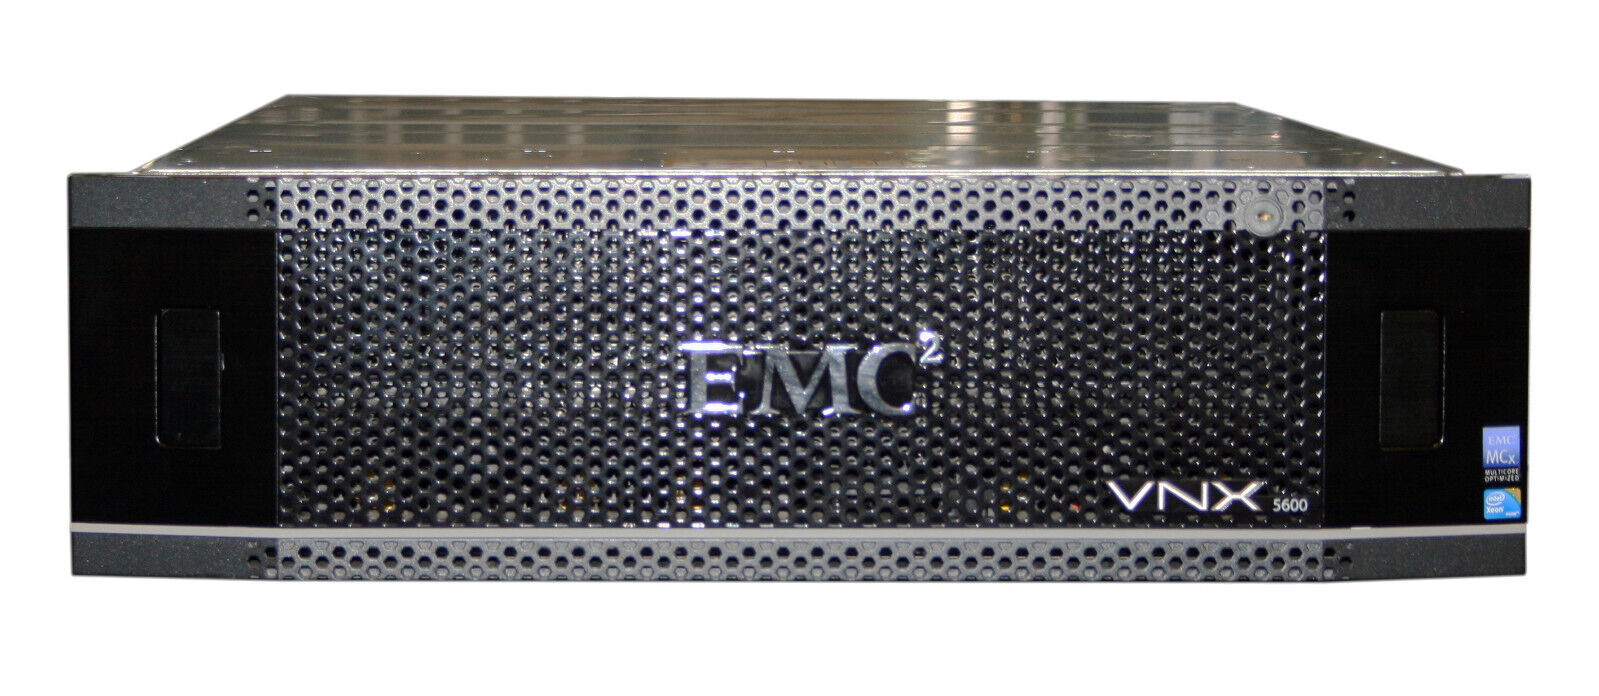 EMC VNX5600 Storage Array, JTFR-2, 25* SAS 2.5